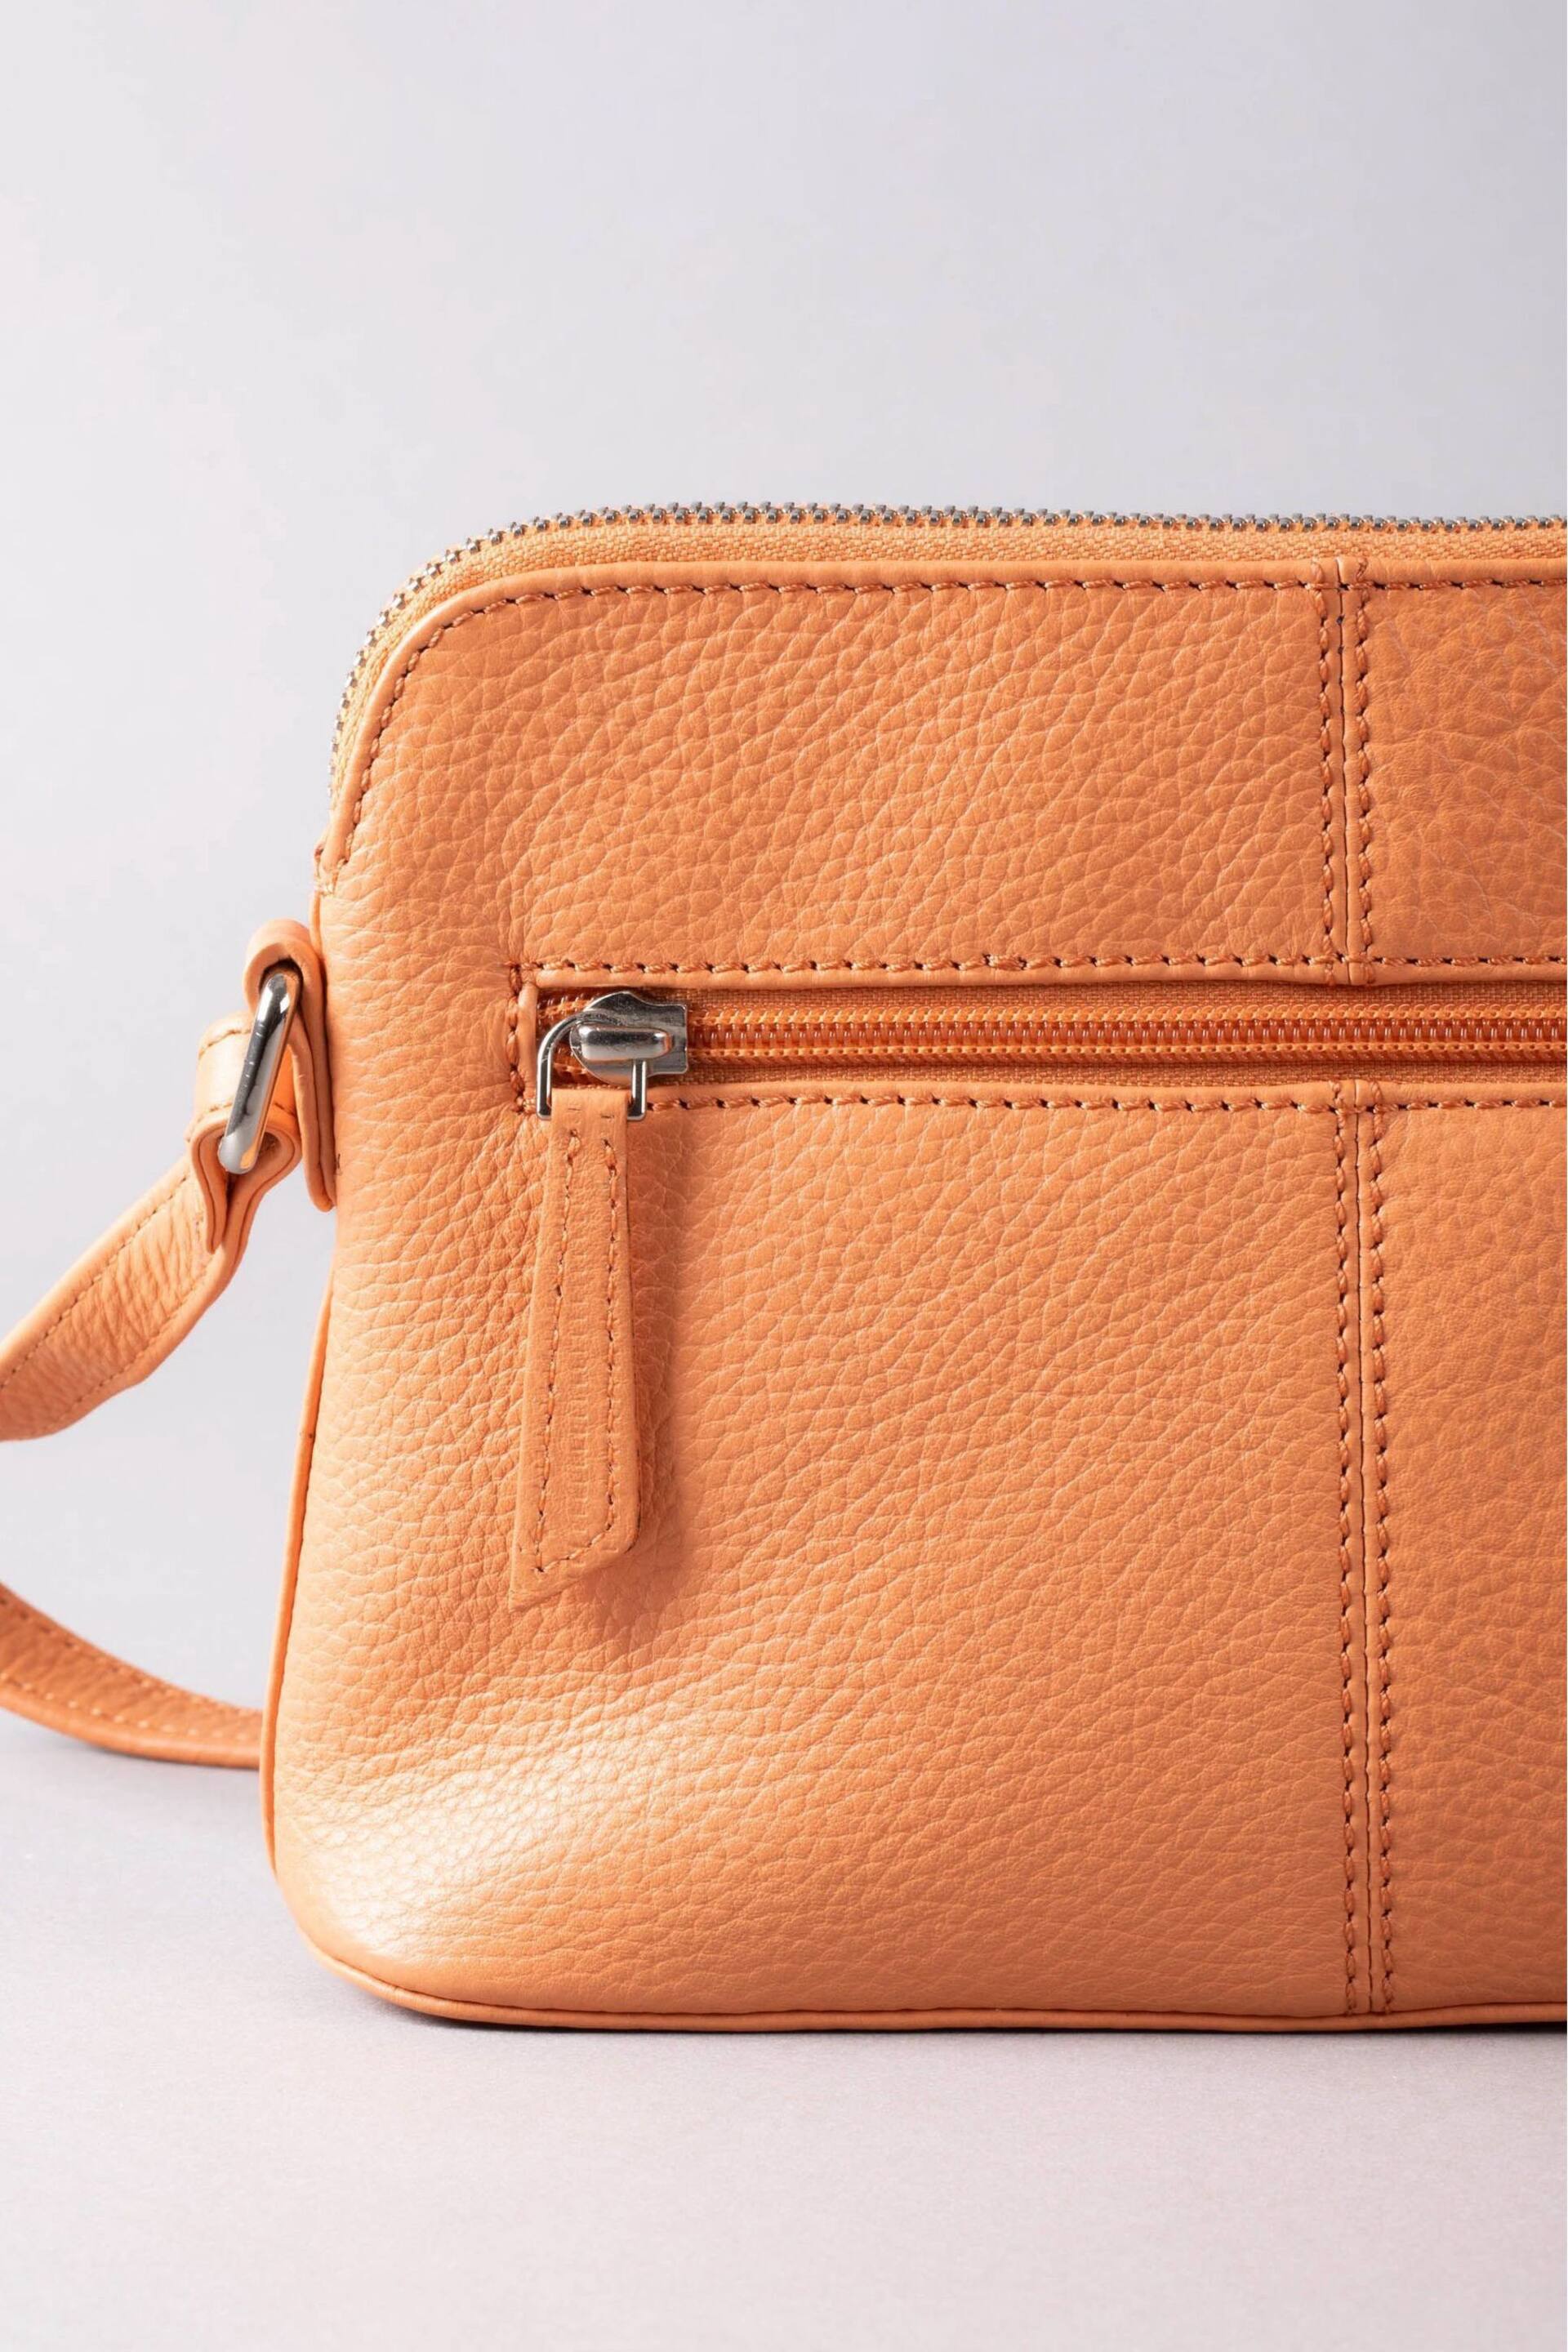 Lakeland Leather Orange Alston Curved Leather Cross-Body Bag - Image 4 of 6